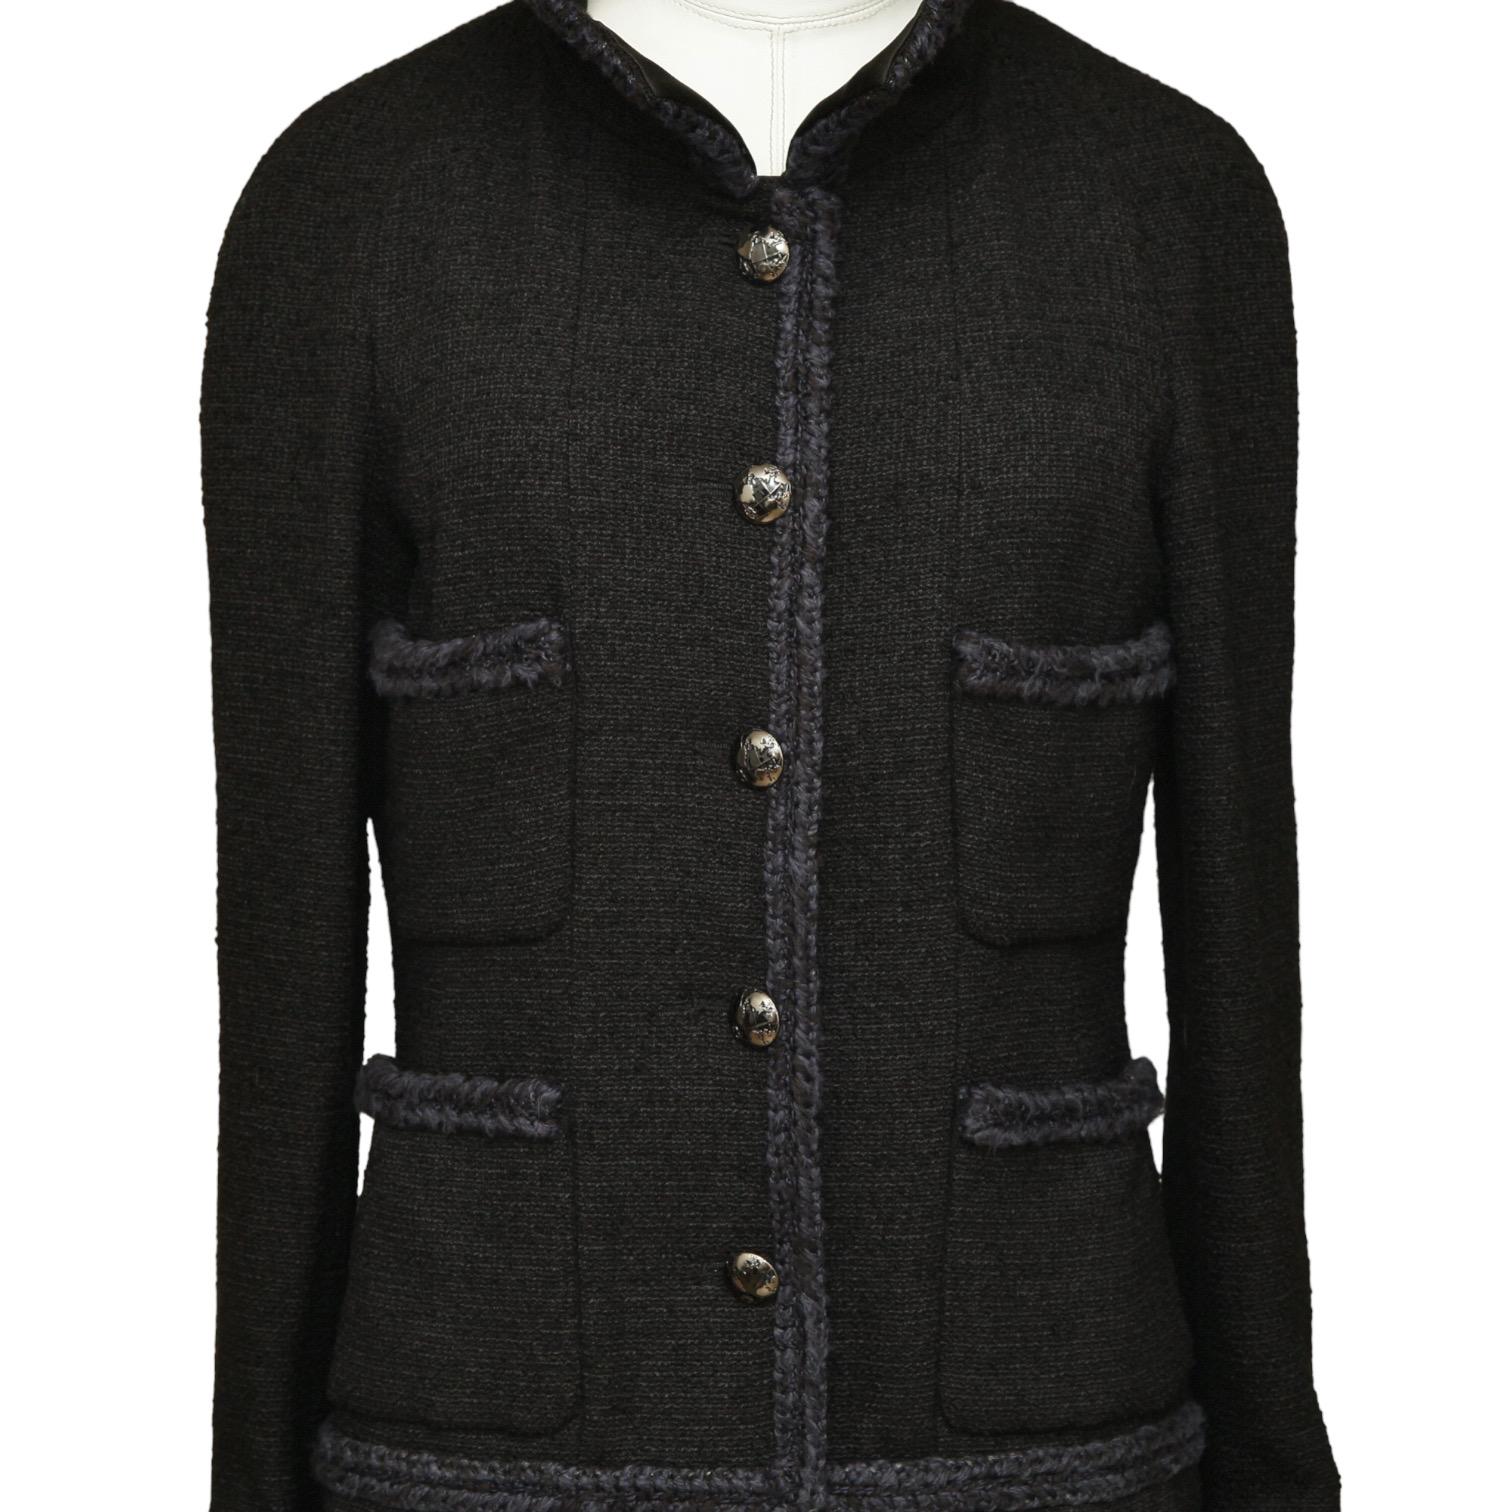 CHANEL  Black Jacket Tweed Wool Braided Gunmetal Buttons Pockets 40 2013 RUNWAY 2